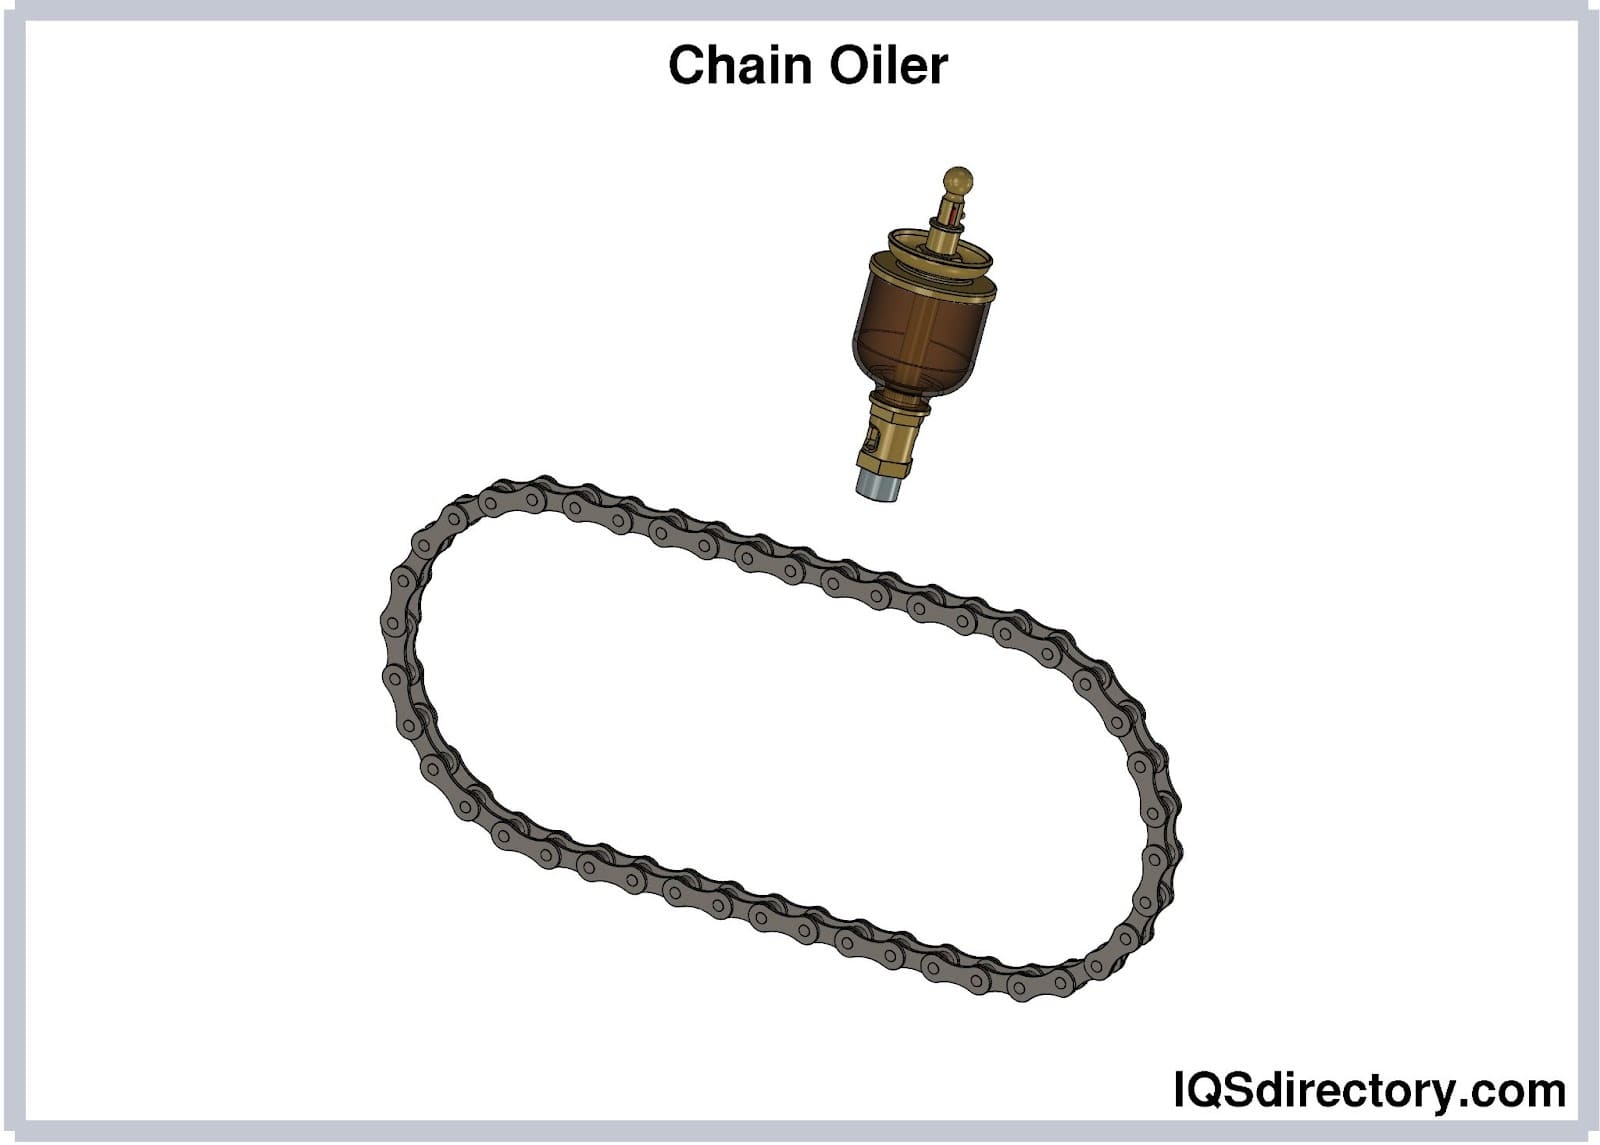 Chain Oiler